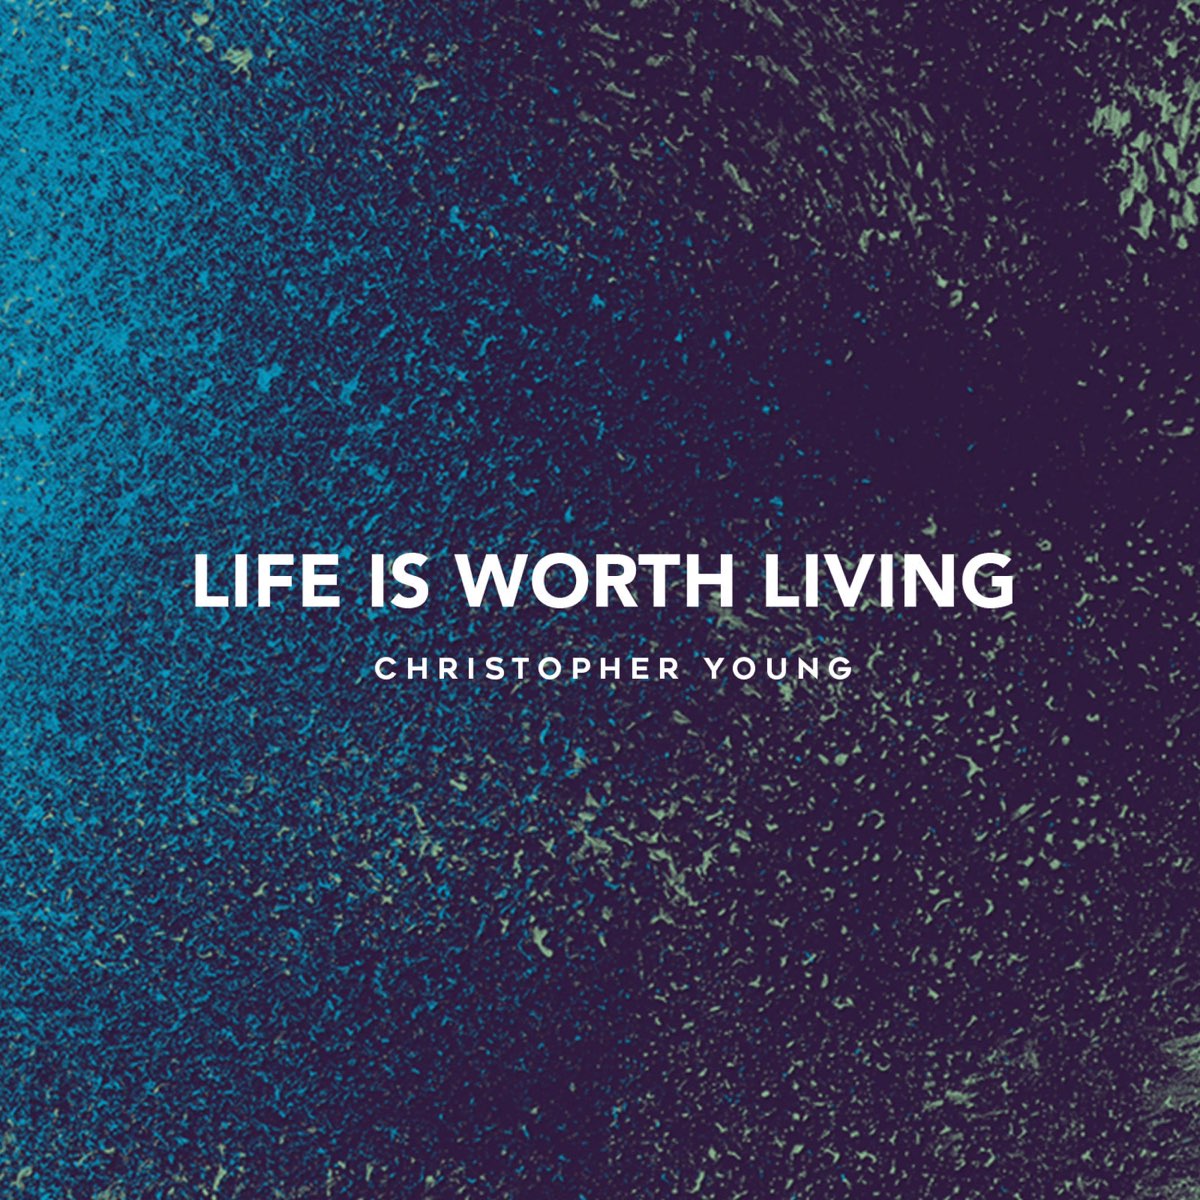 Life is worth